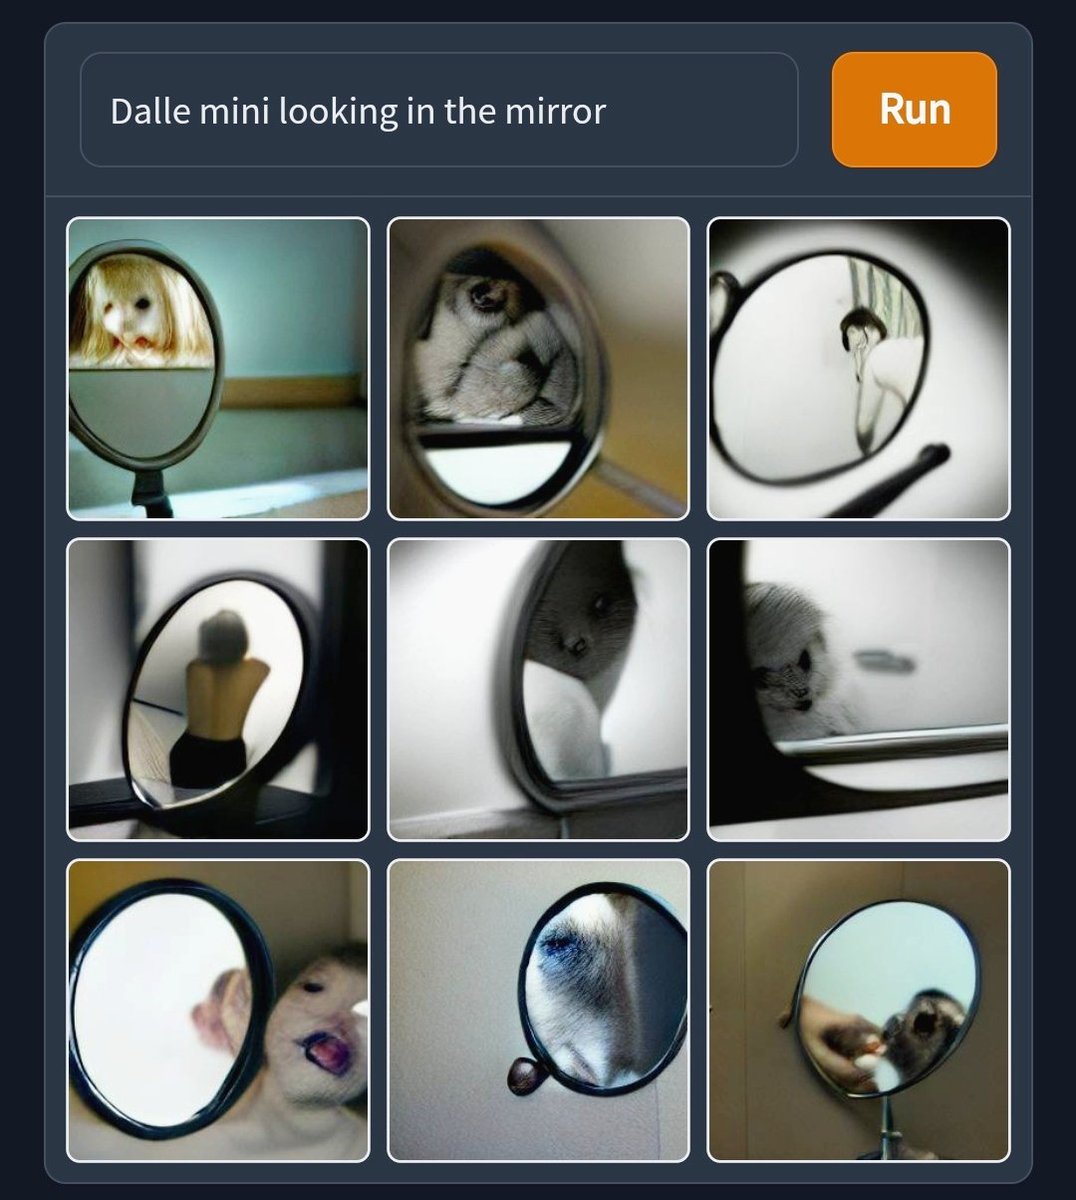 Dall-E Mini - circle - Dalle mini looking in the mirror Run